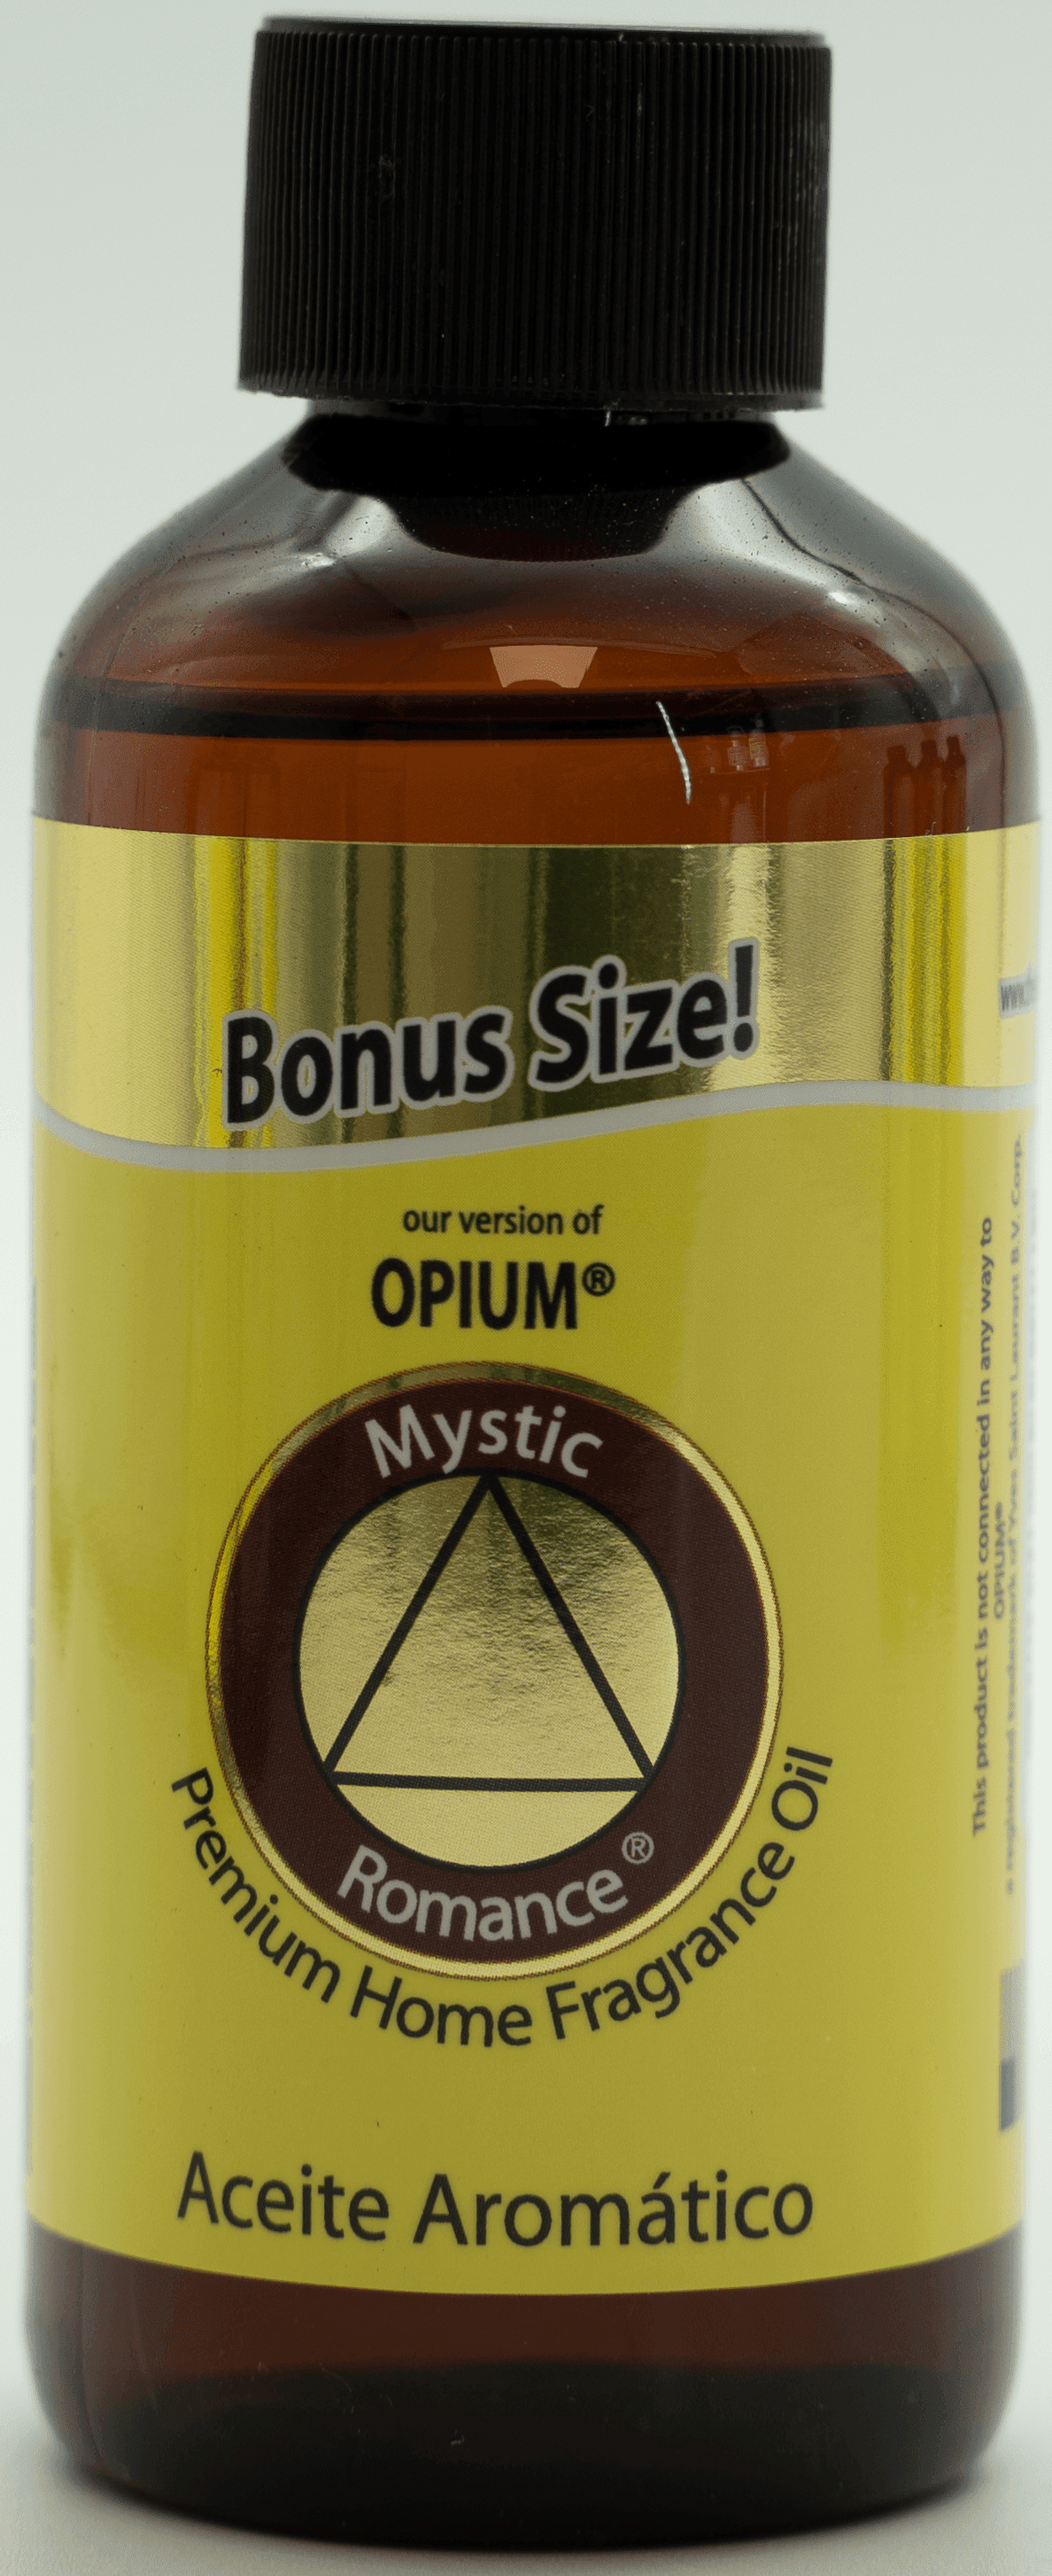 Mystic Romance Premium Home Fragrance Oil 